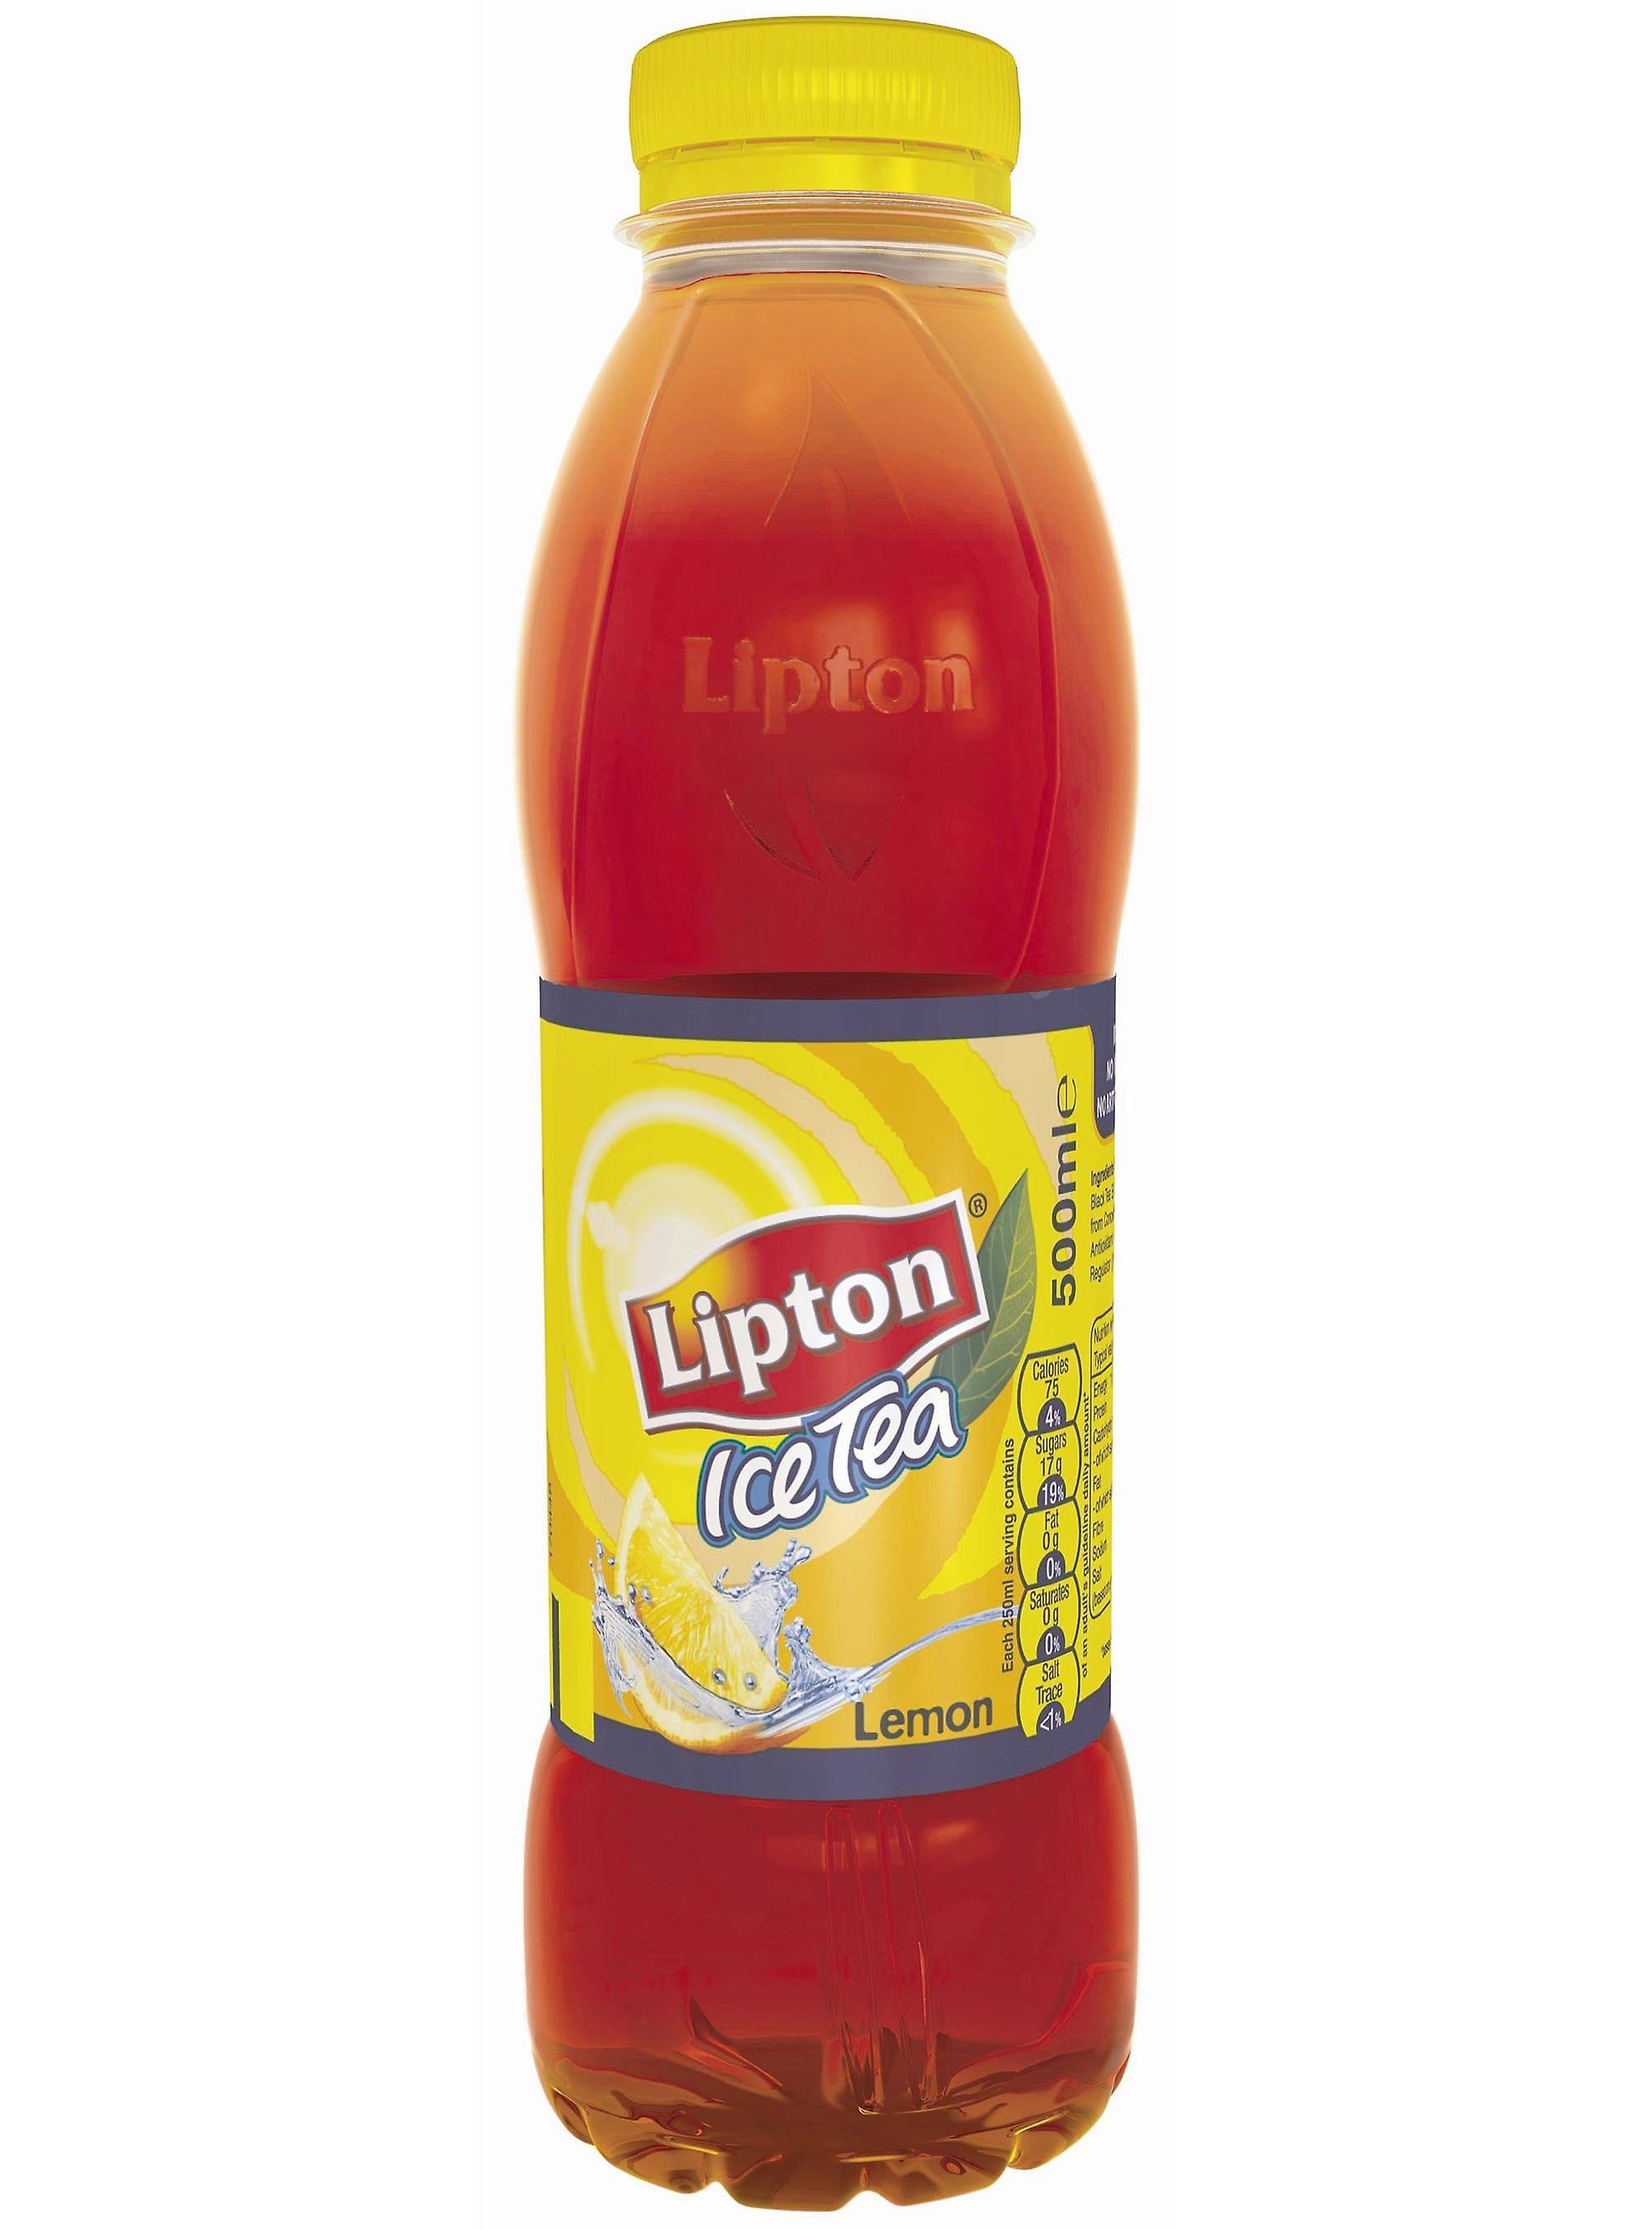 Lipton Ice Tea - Lemon